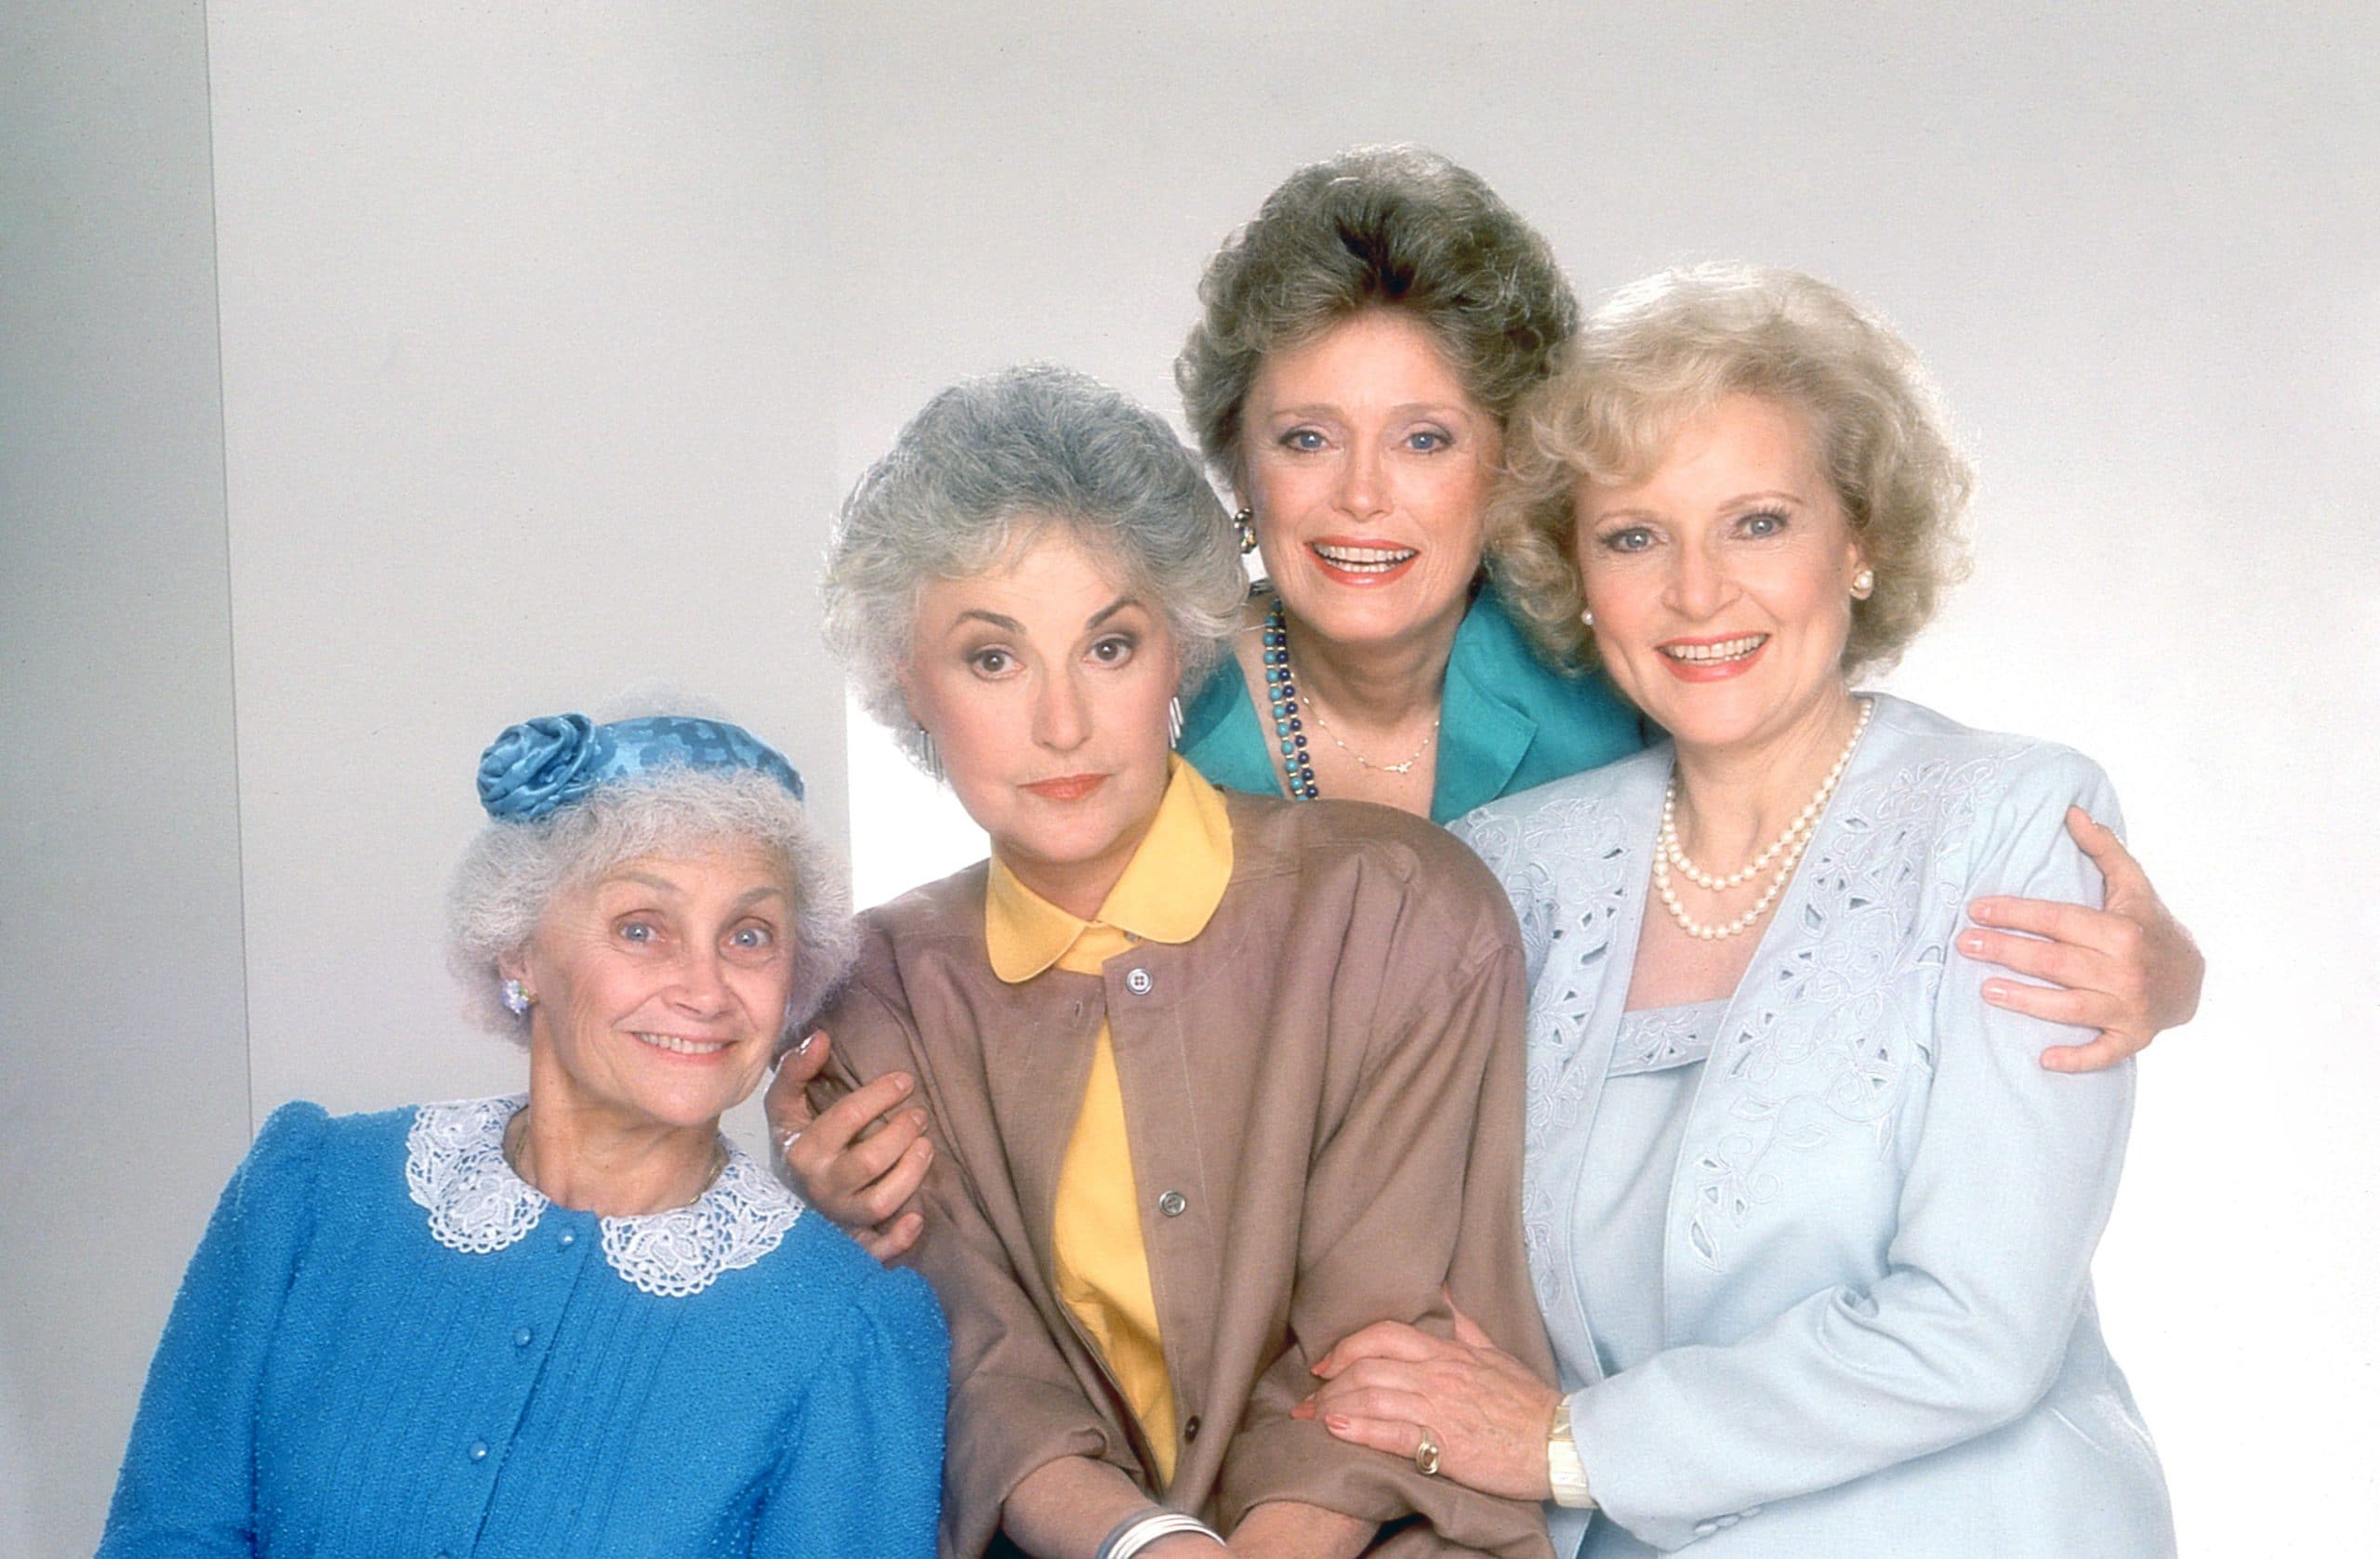 THE GOLDEN GIRLS, from left: Estelle Getty, Bea Arthur, Rue McClanahan, Betty White, (Season 1, 1985), 1985-1992